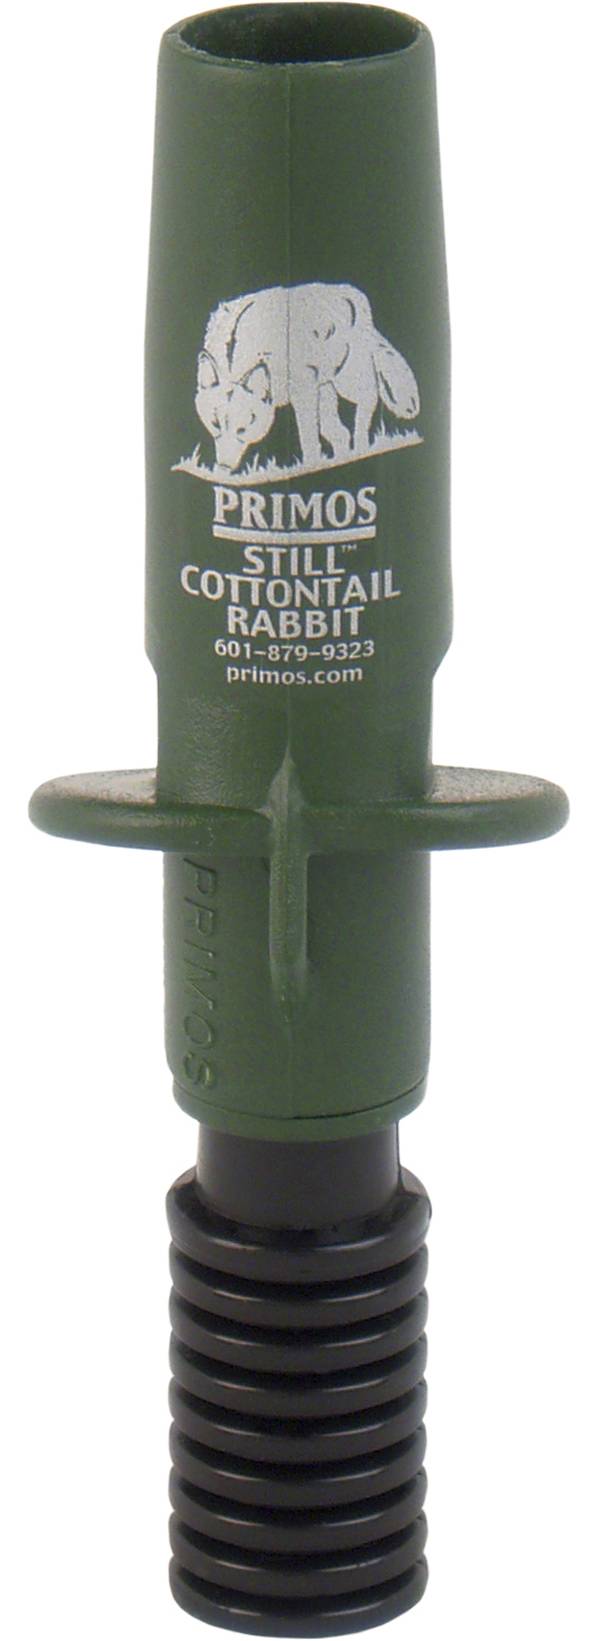 Primos 316 Predator Still Cottontail Rabbit Distress Call for sale online 